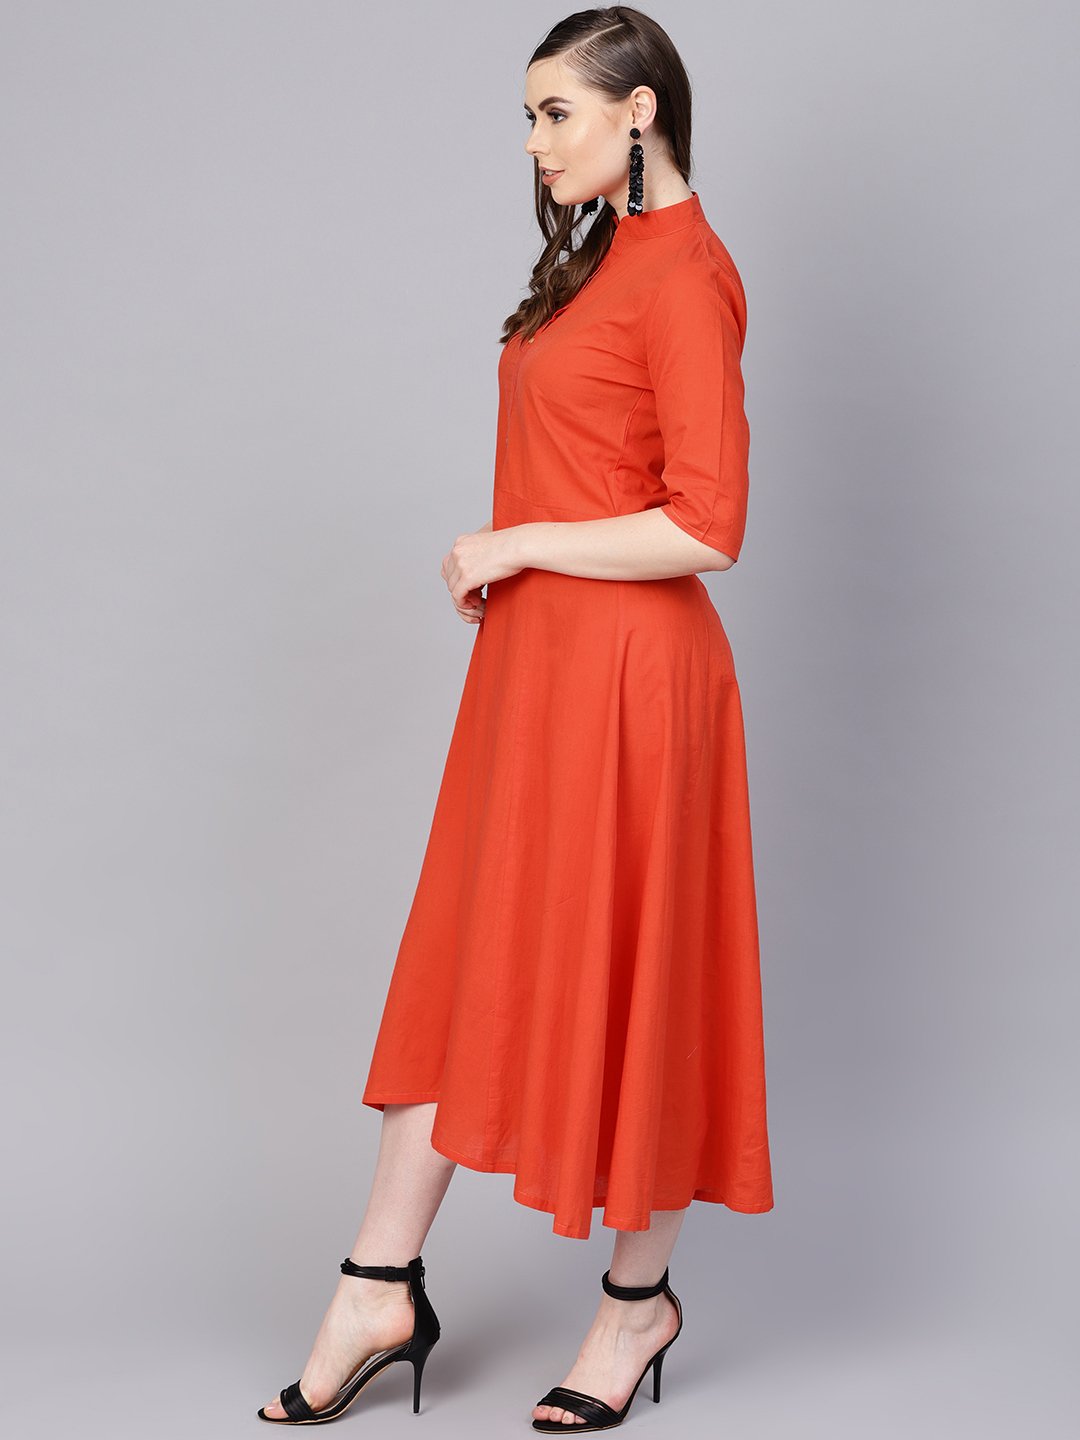 Women's Solid Orange Maxi Dress With Madarin Collar & 3/4 Sleeves - Nayo Clothing